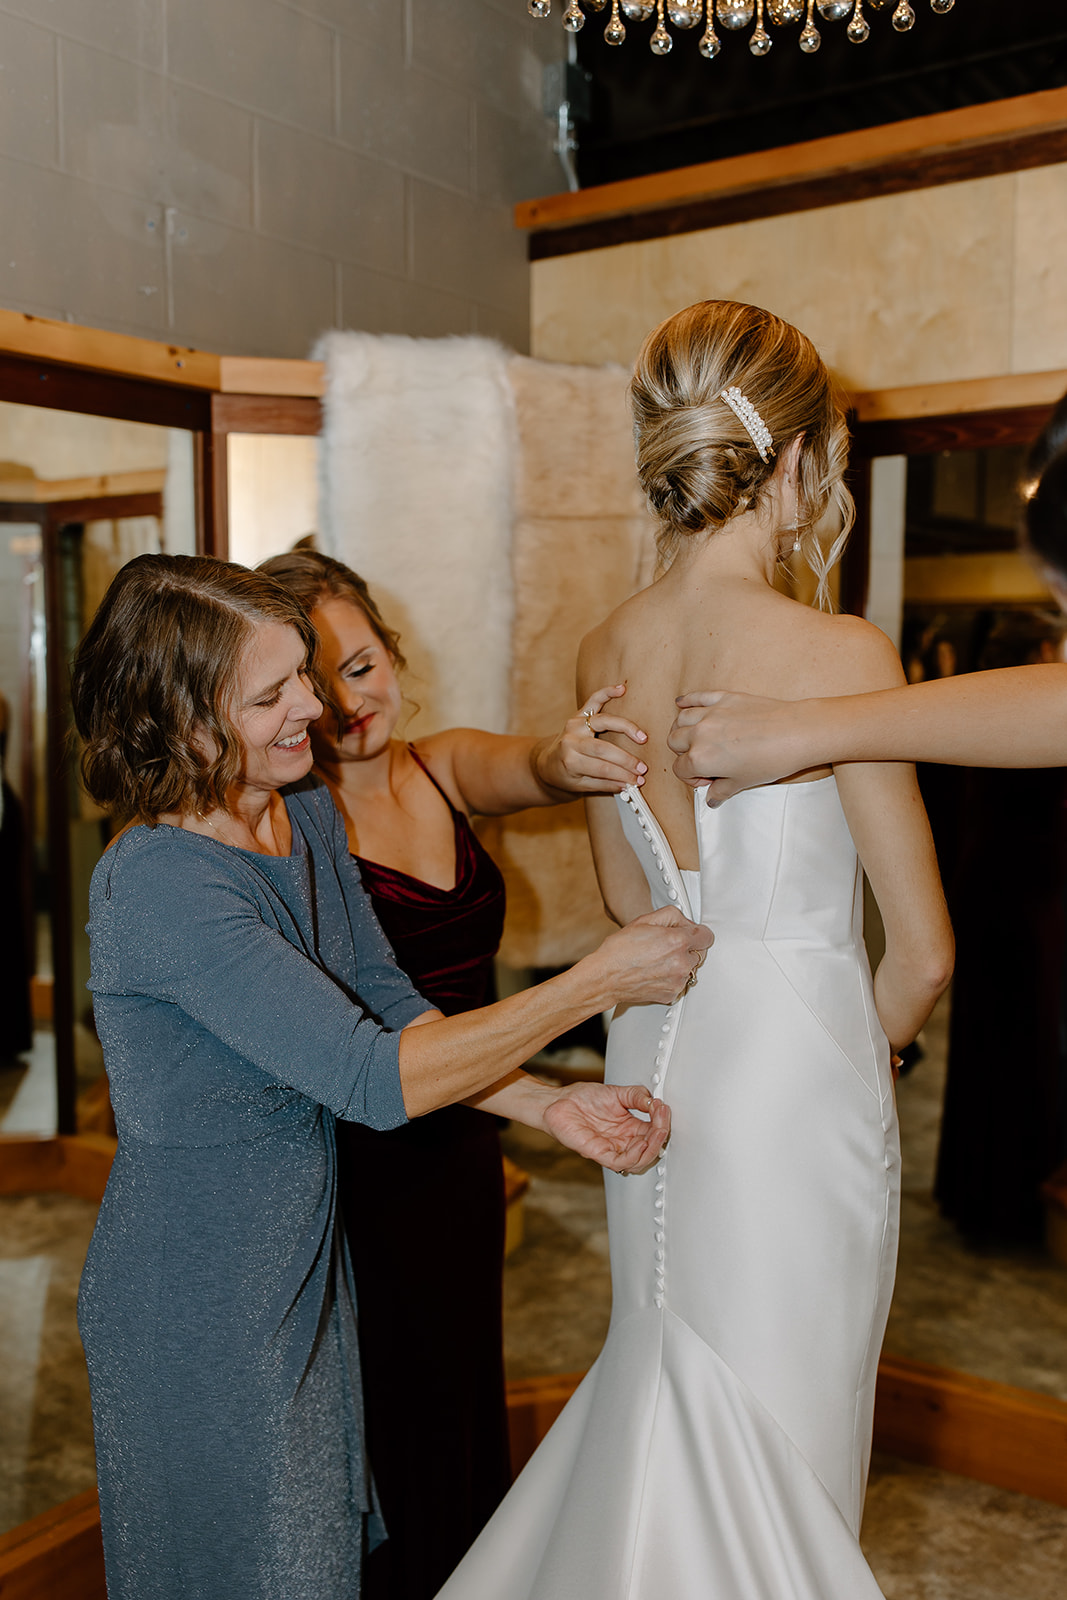 Mother zipping the bride's wedding dress